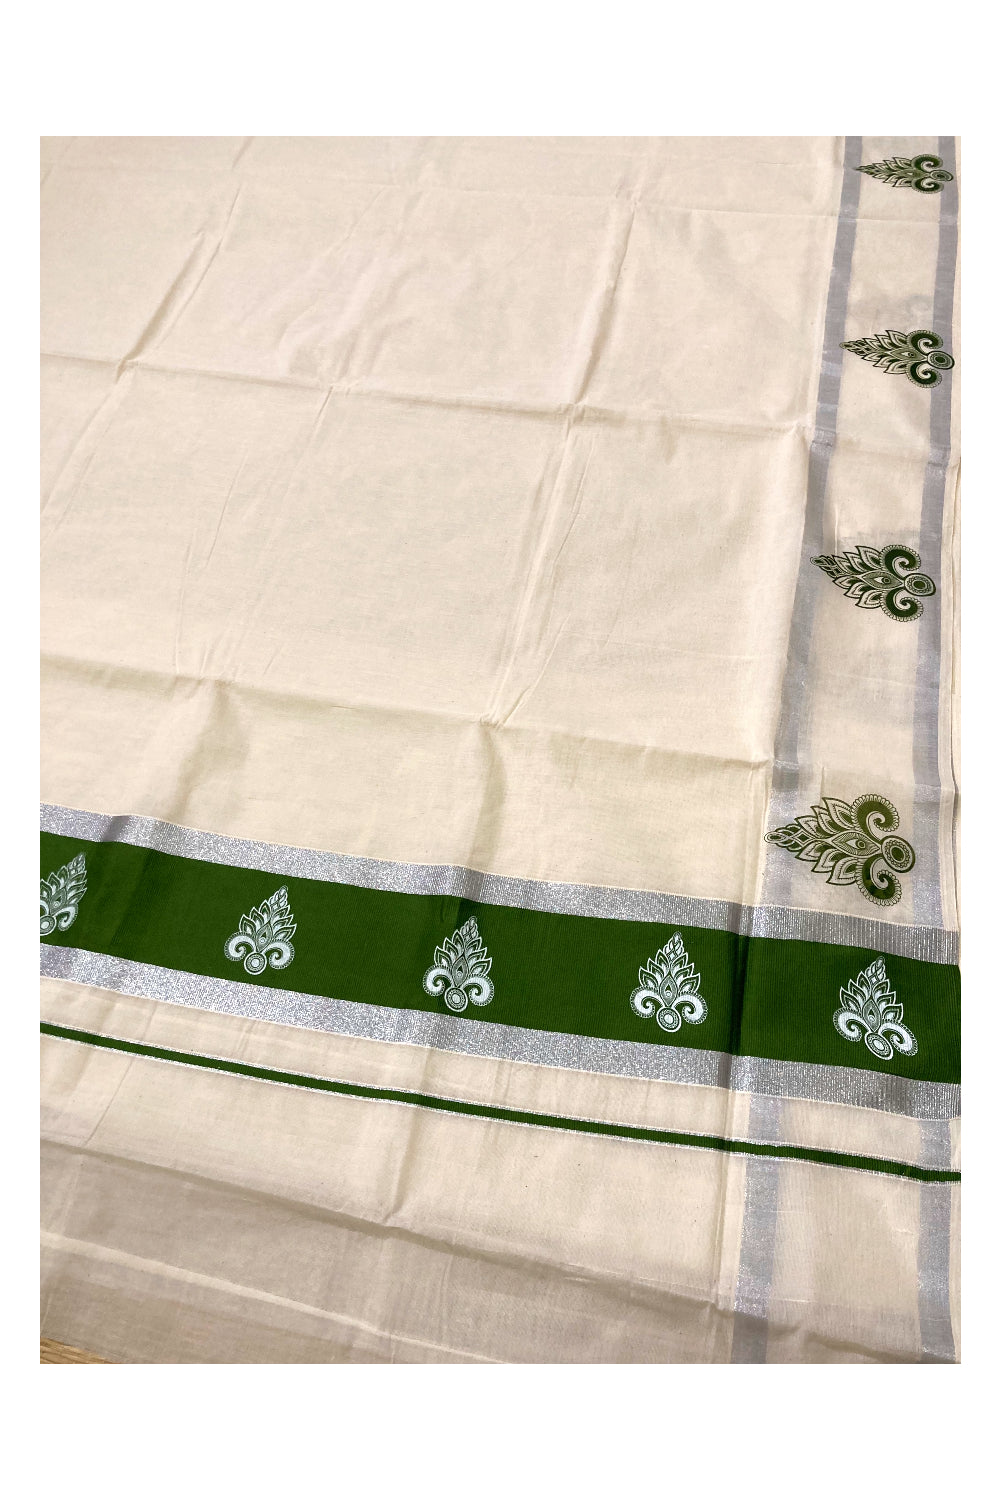 Pure Cotton Kerala Silver Kasavu Saree with White Block Prints in Light Green Pallu